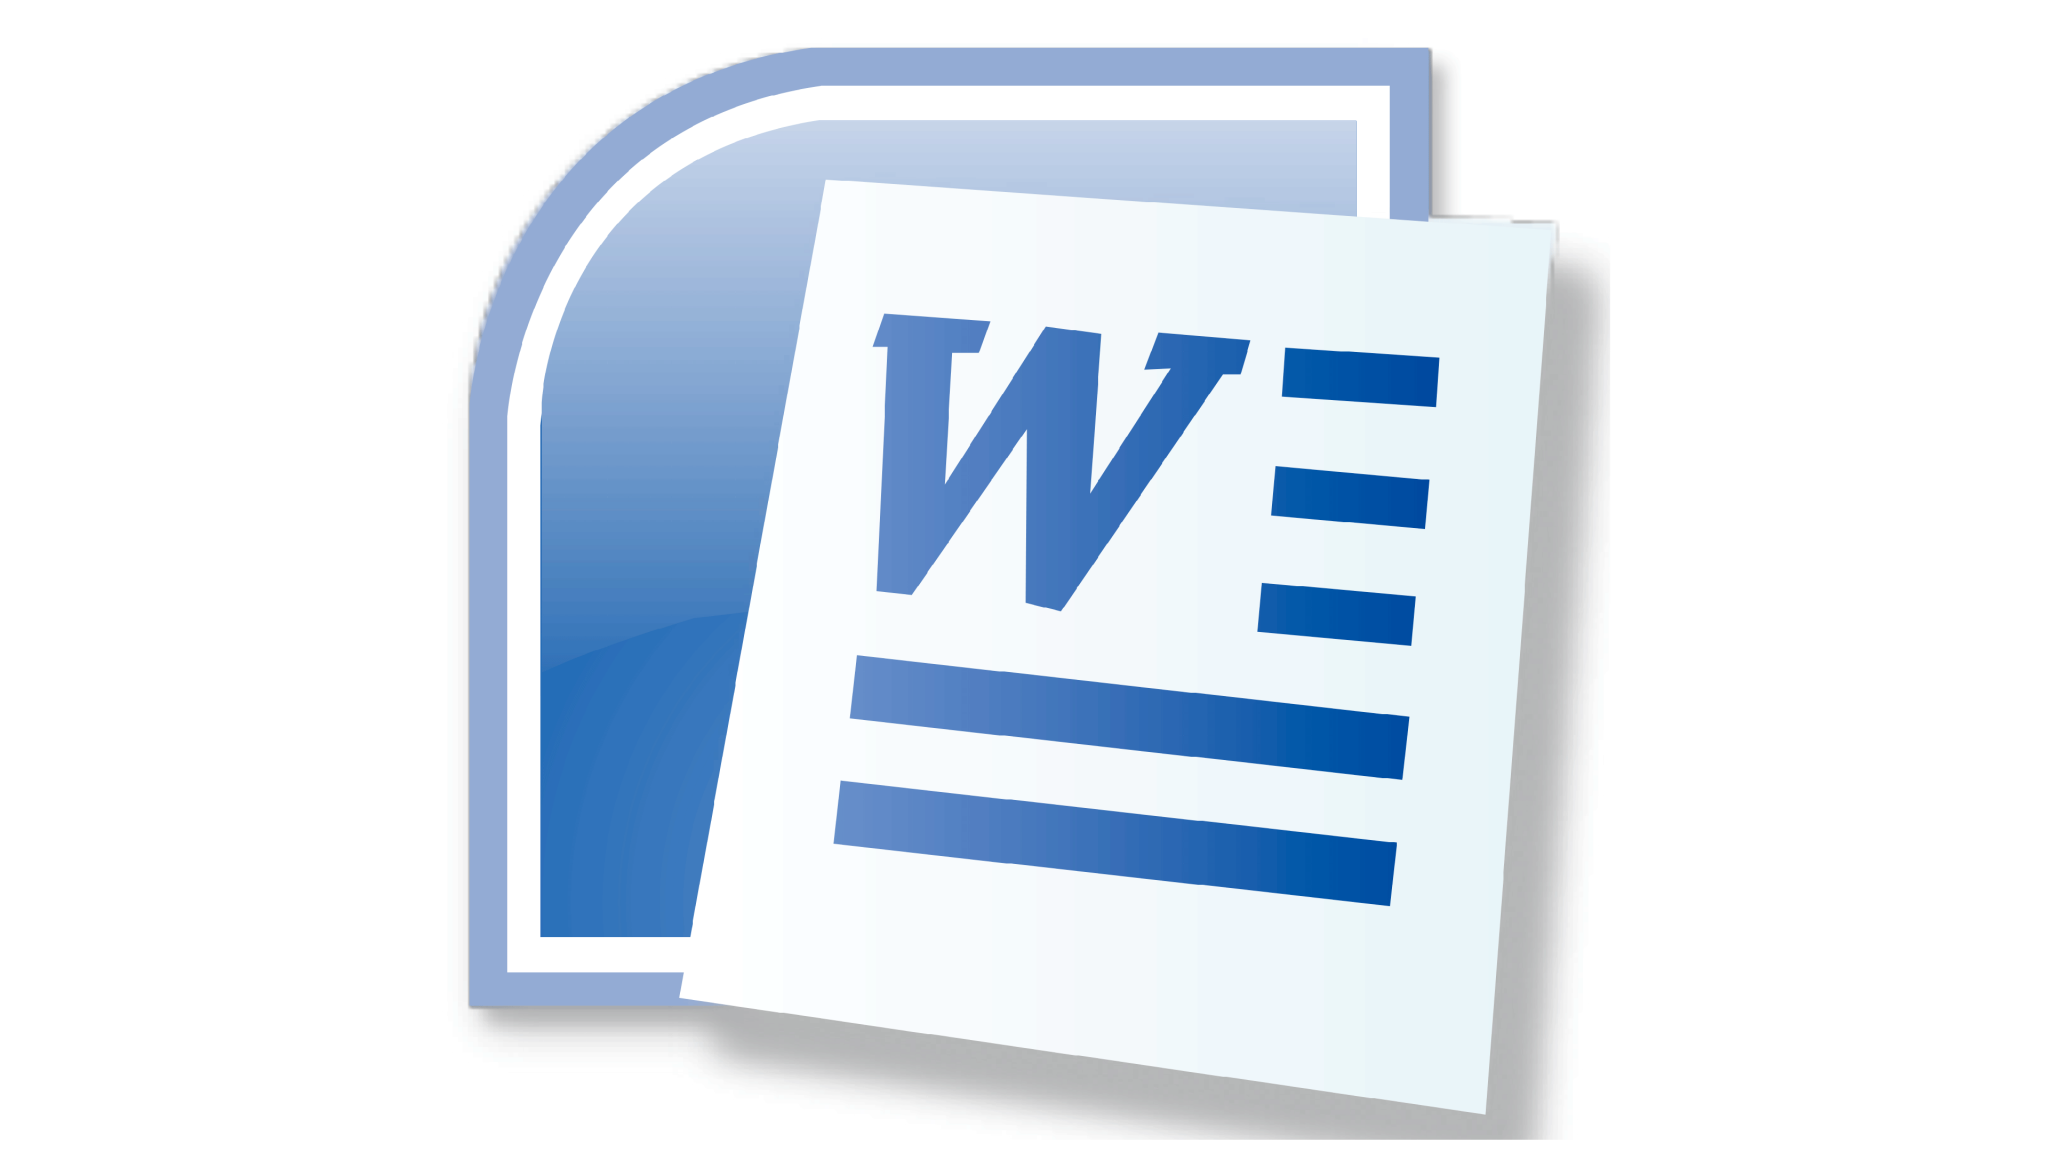 Microsoft Office Word логотип. Значок Майкрософт ворд 2010. MS Word 2007 значок. Microsoft Office Word 2010 логотип.